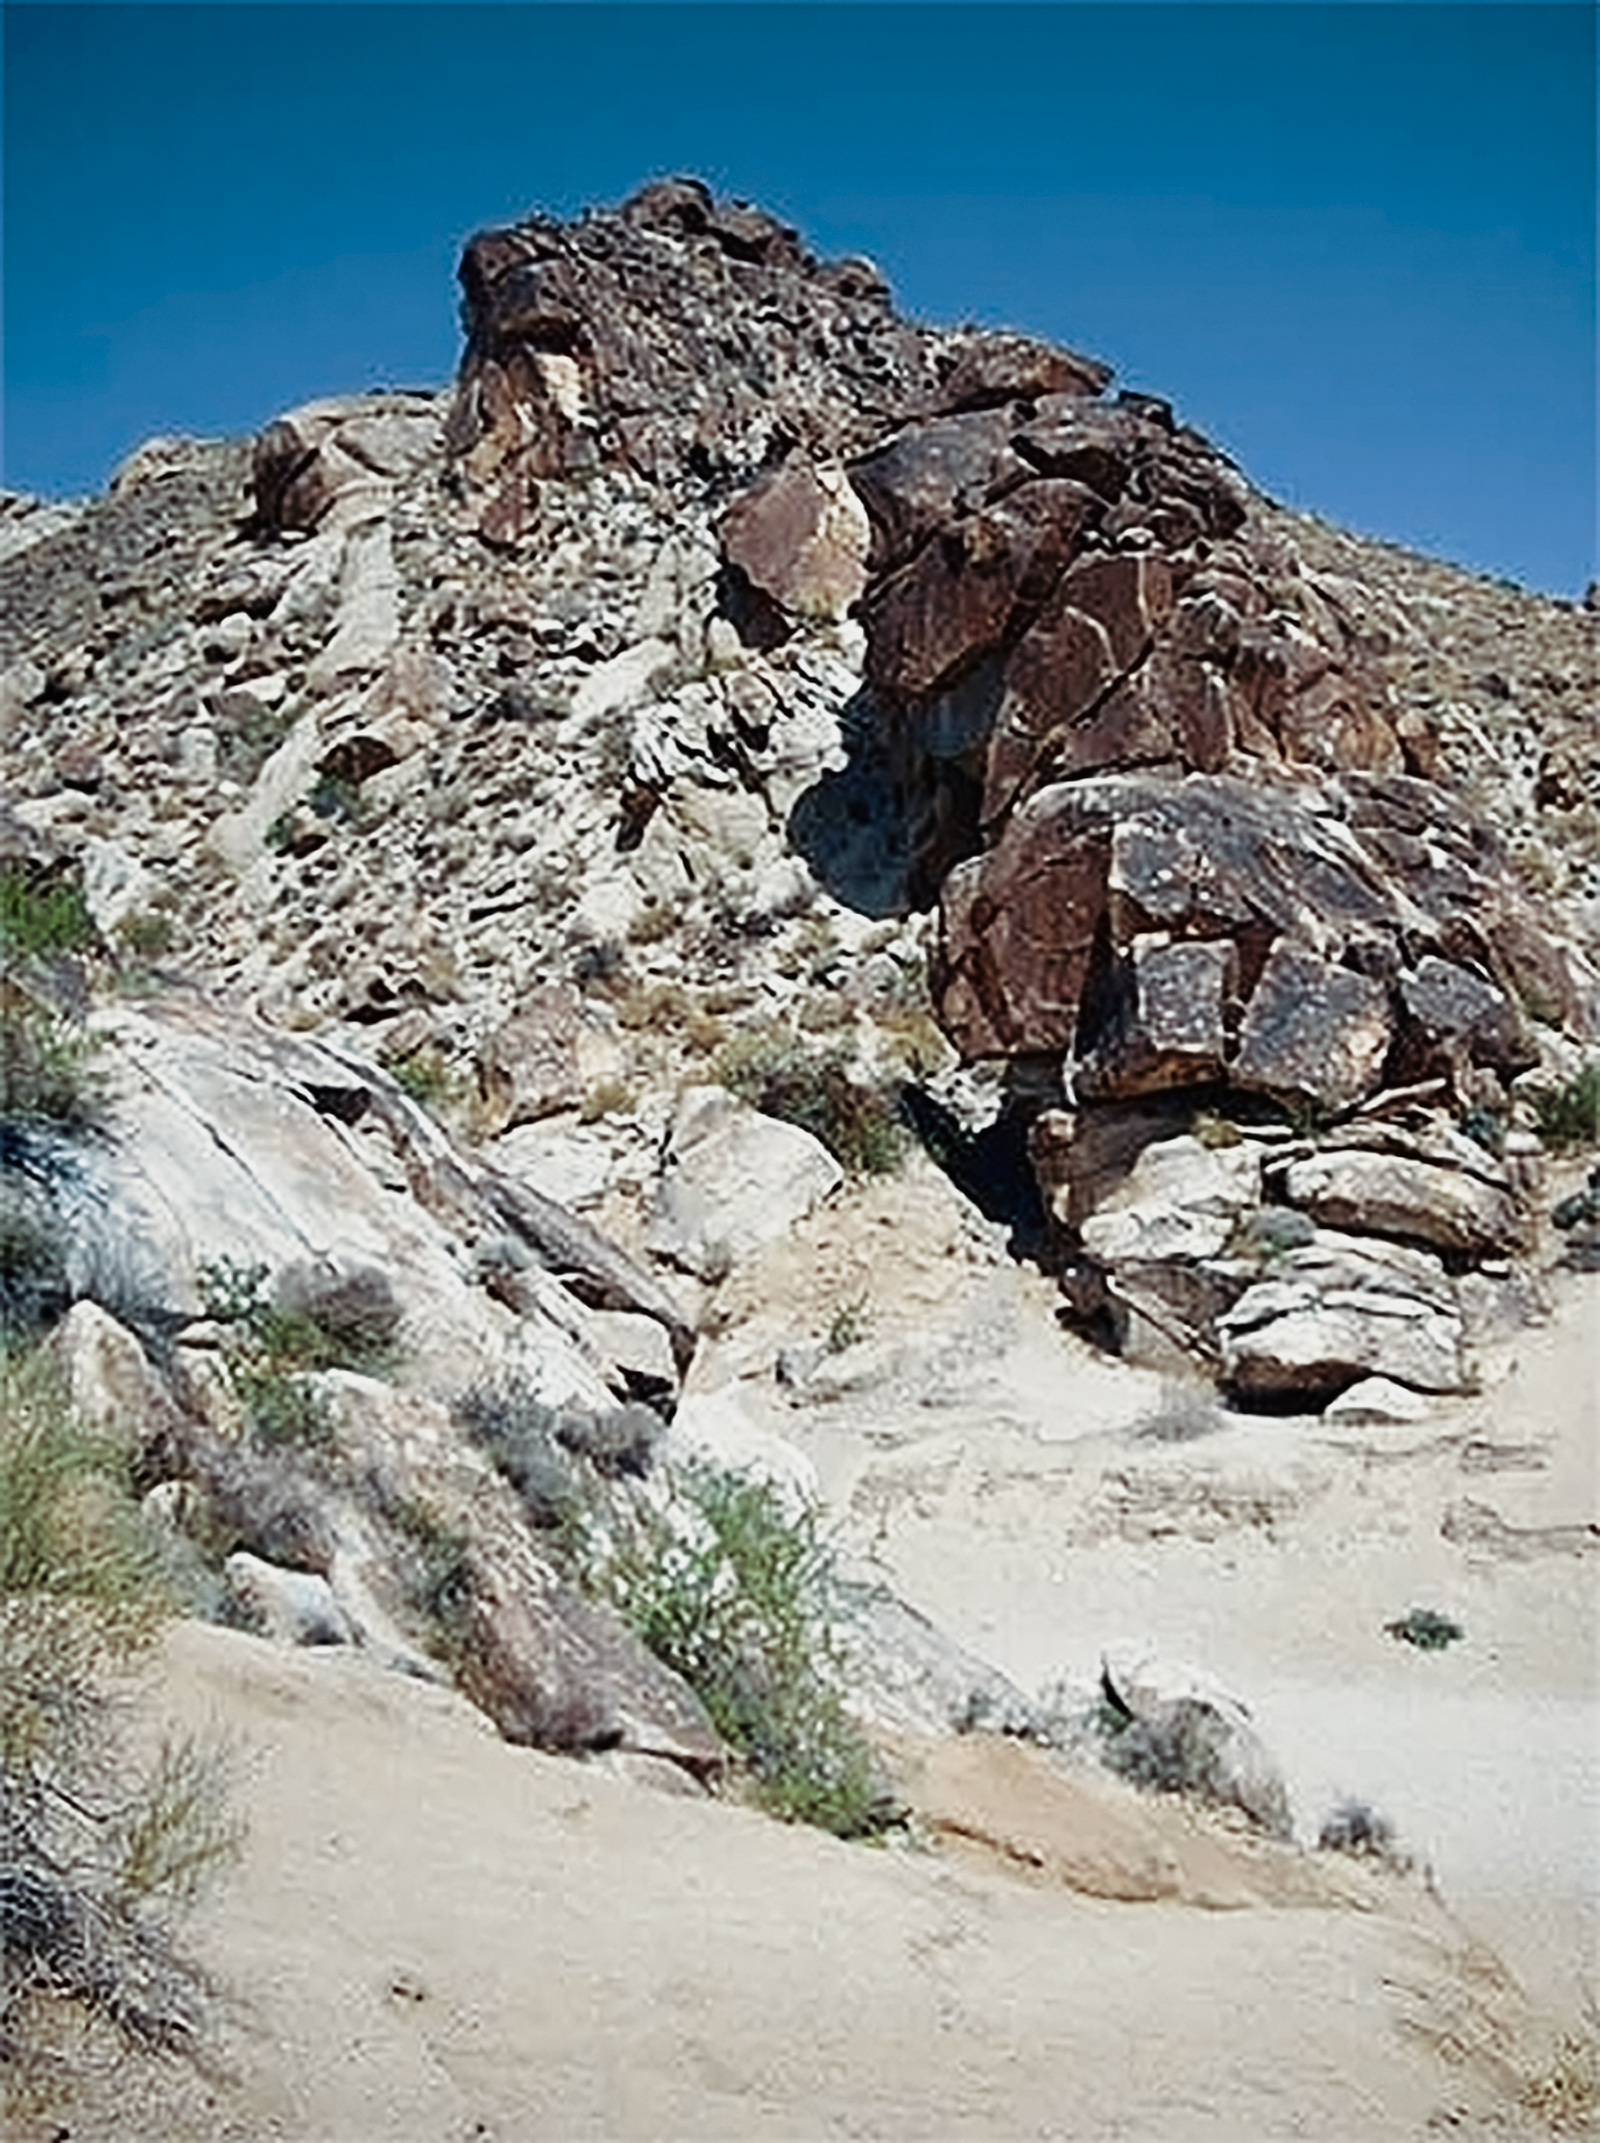 Grapevine Canyon Petroglyph Site Nevada Rock Art America United States USA Foundation Bradshaw Foundation